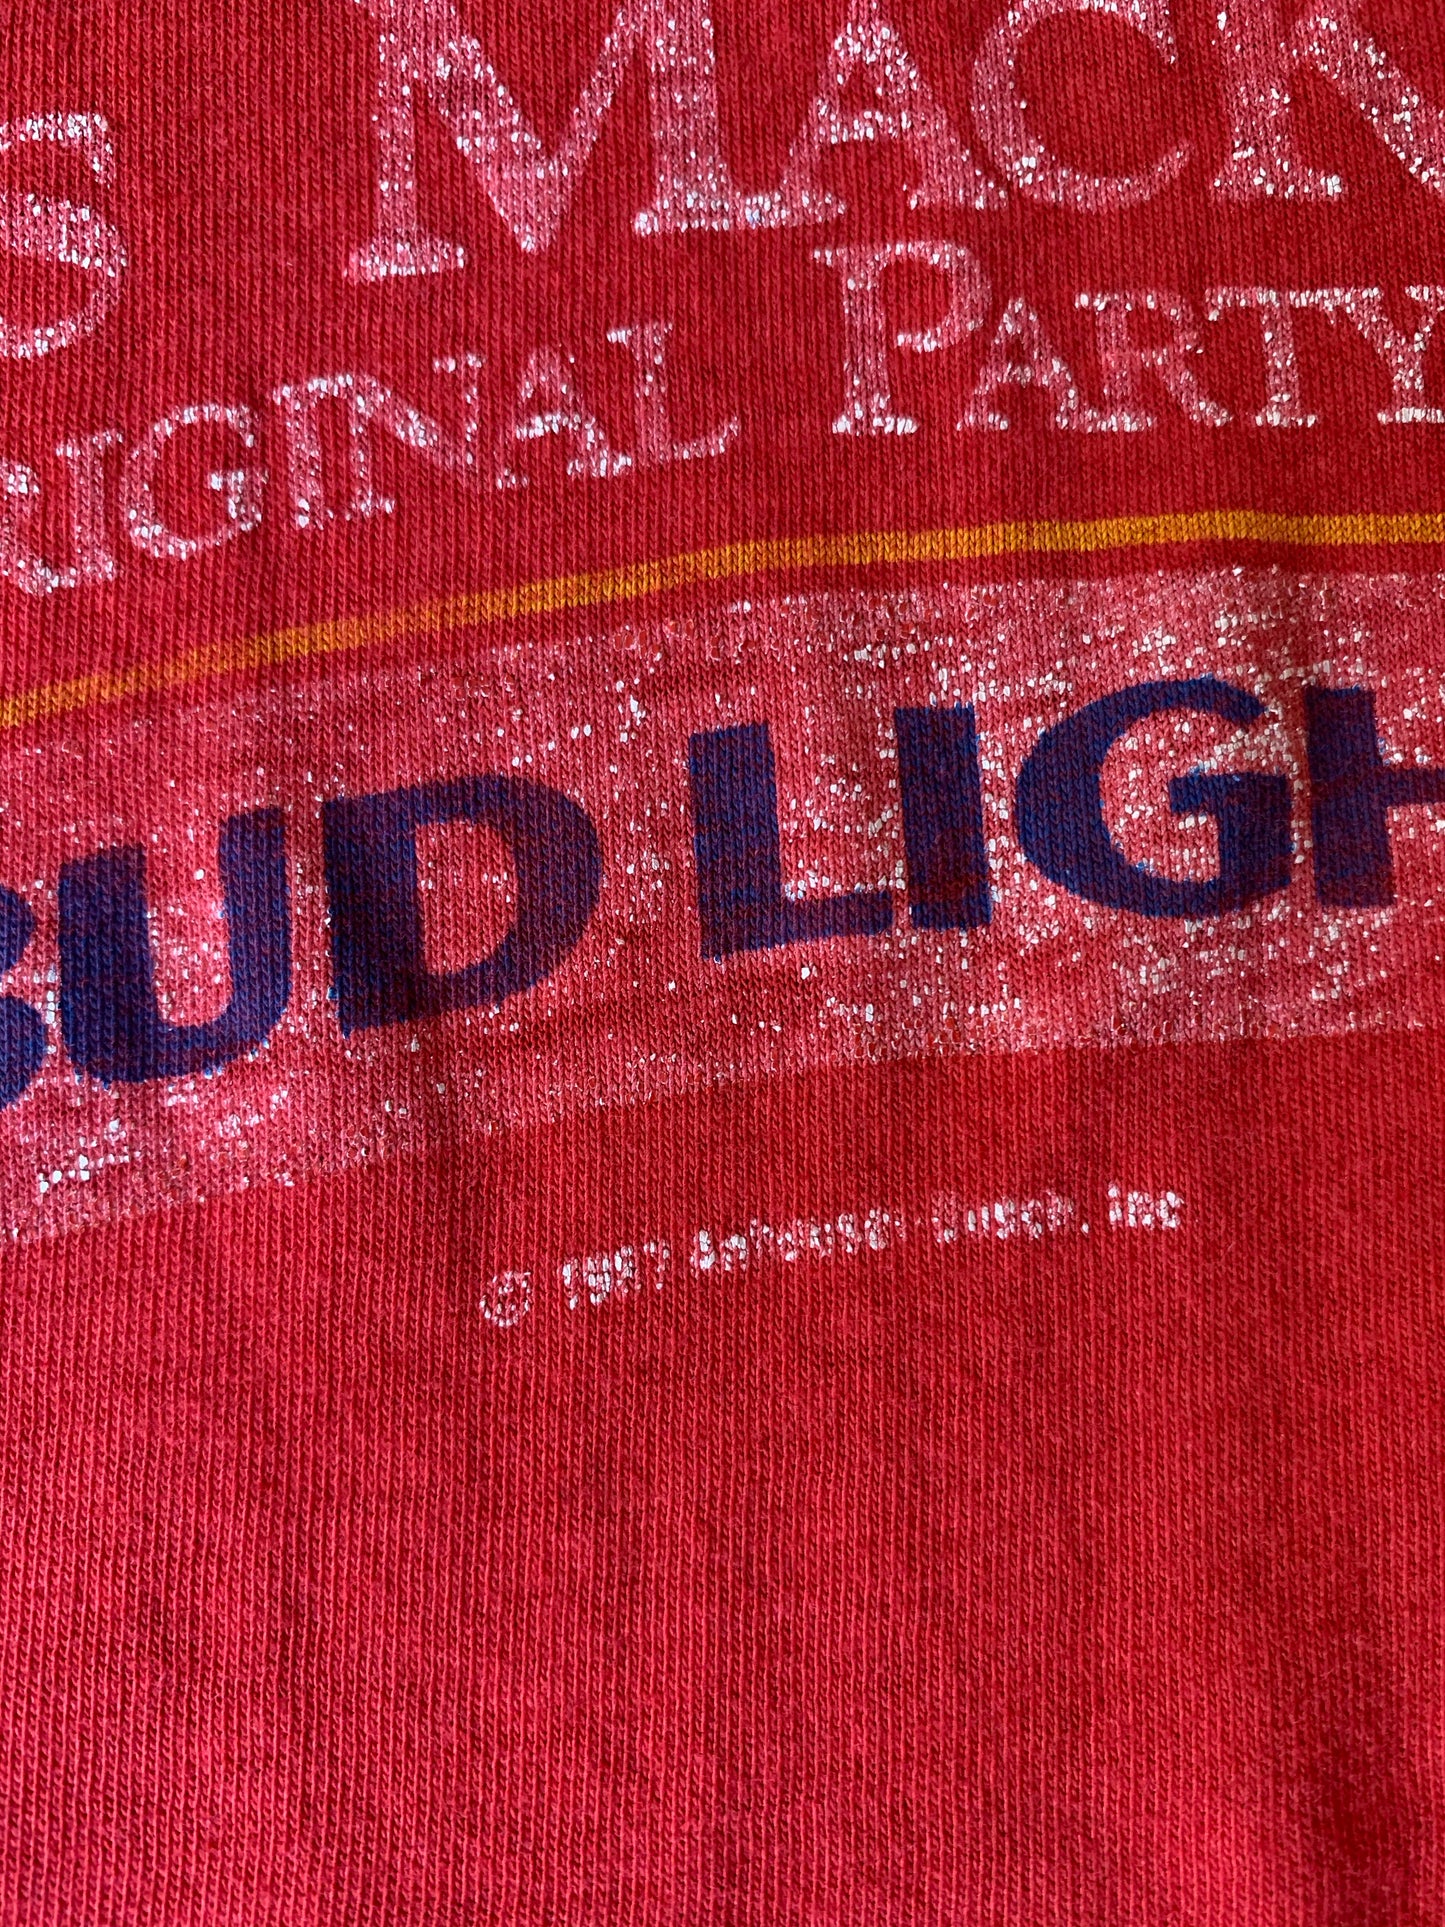 Vintage 1987 Spuds Mackenzie Bud Light T-Shirt Party Animal